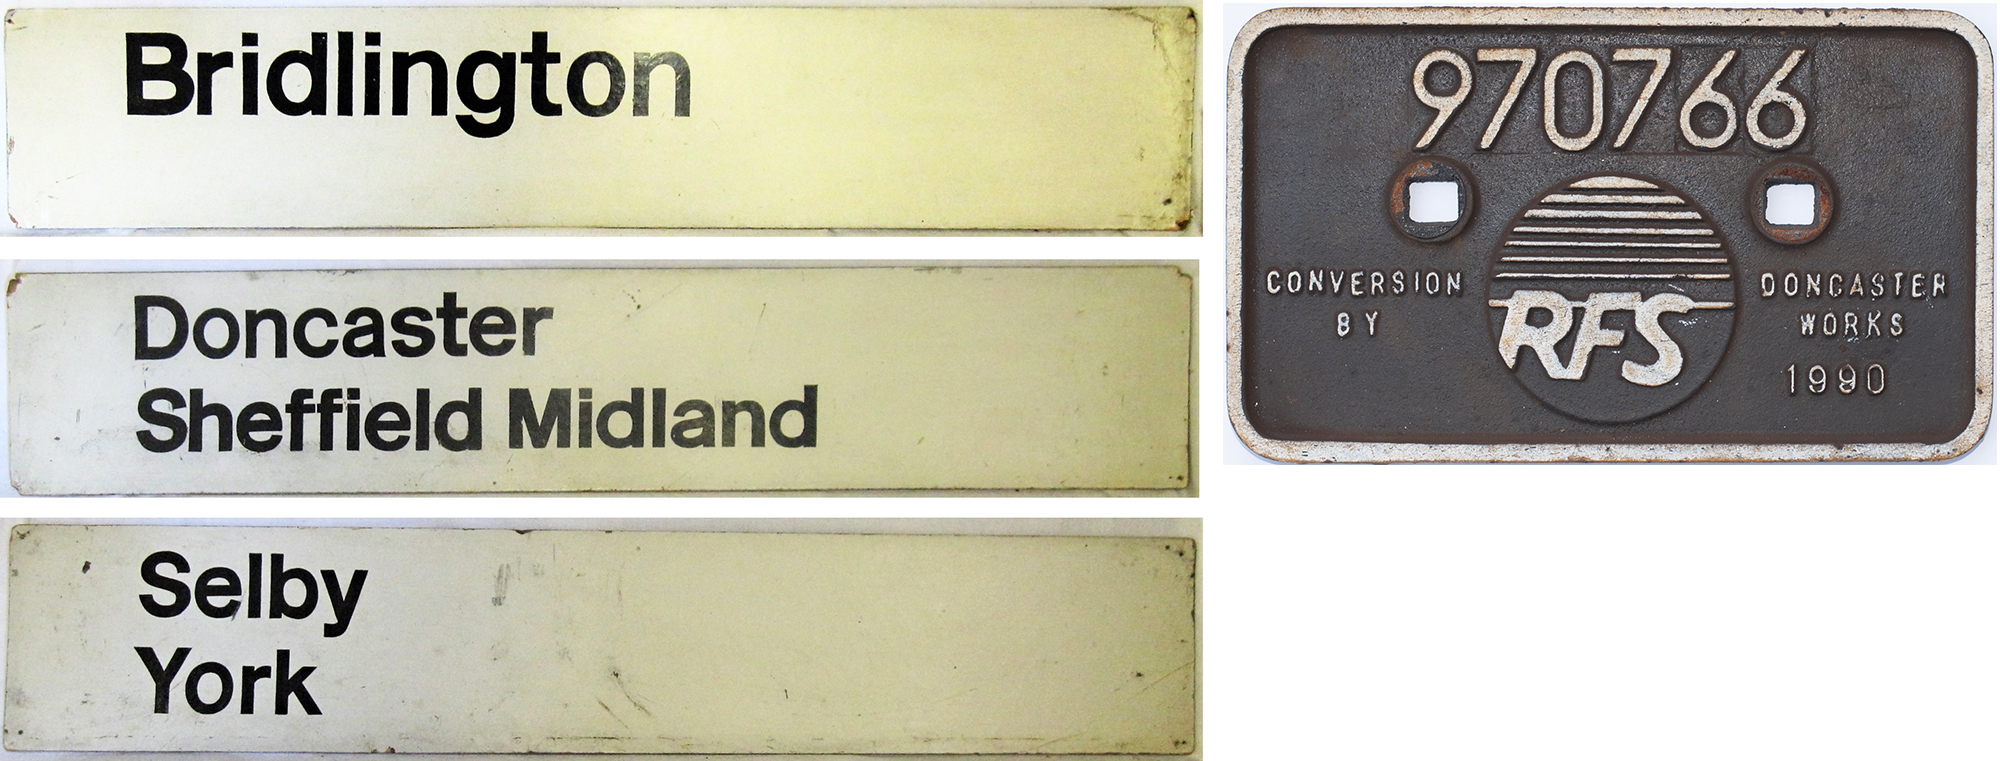 3 x British Rail 1970s style destination boards. BRIDLINGTON. DONCASTER SHEFFIELD MIDLAND and